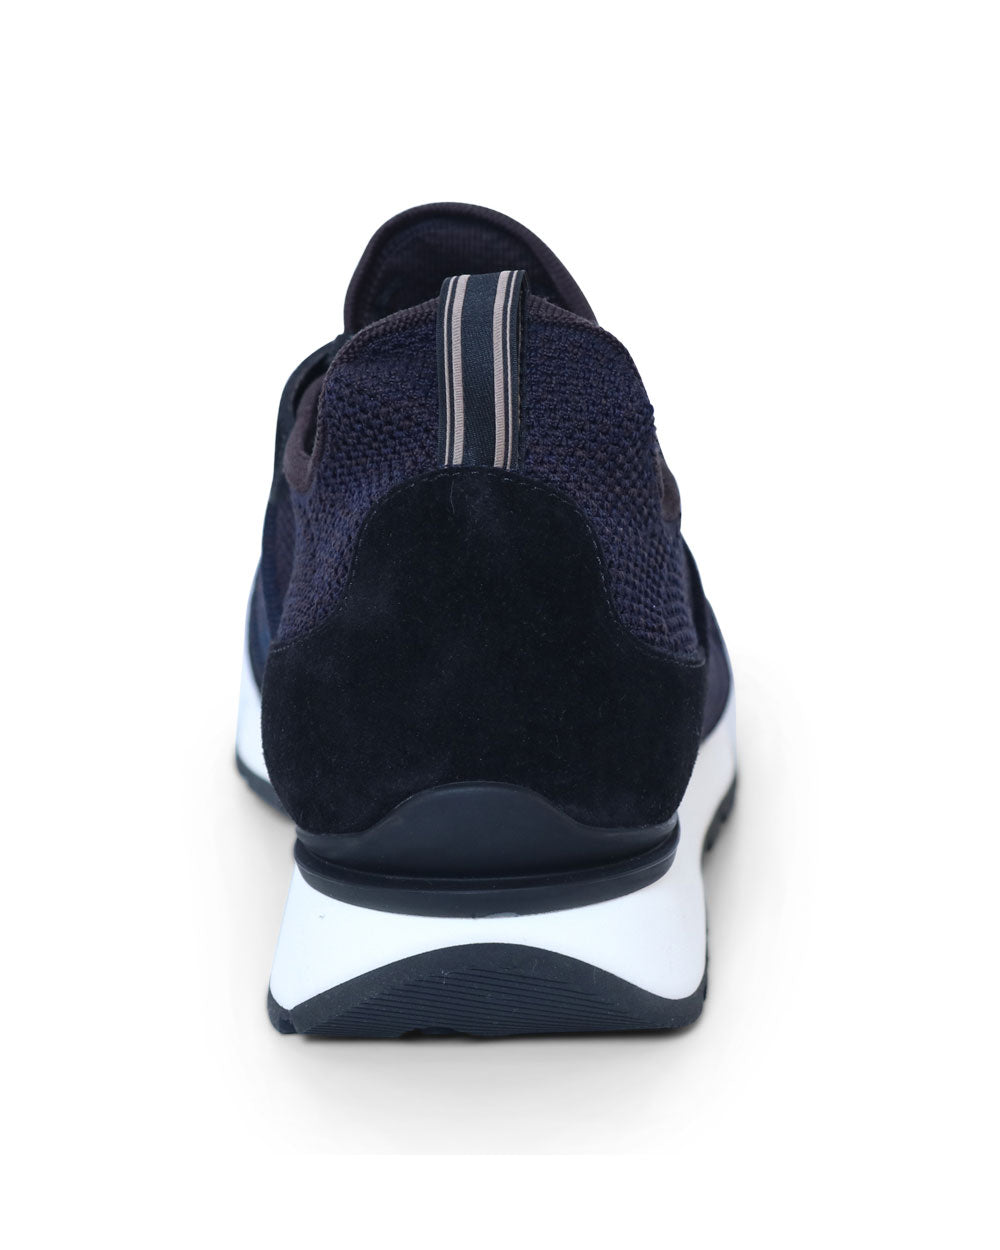 Midnight Runner Sneaker in Blue and Black